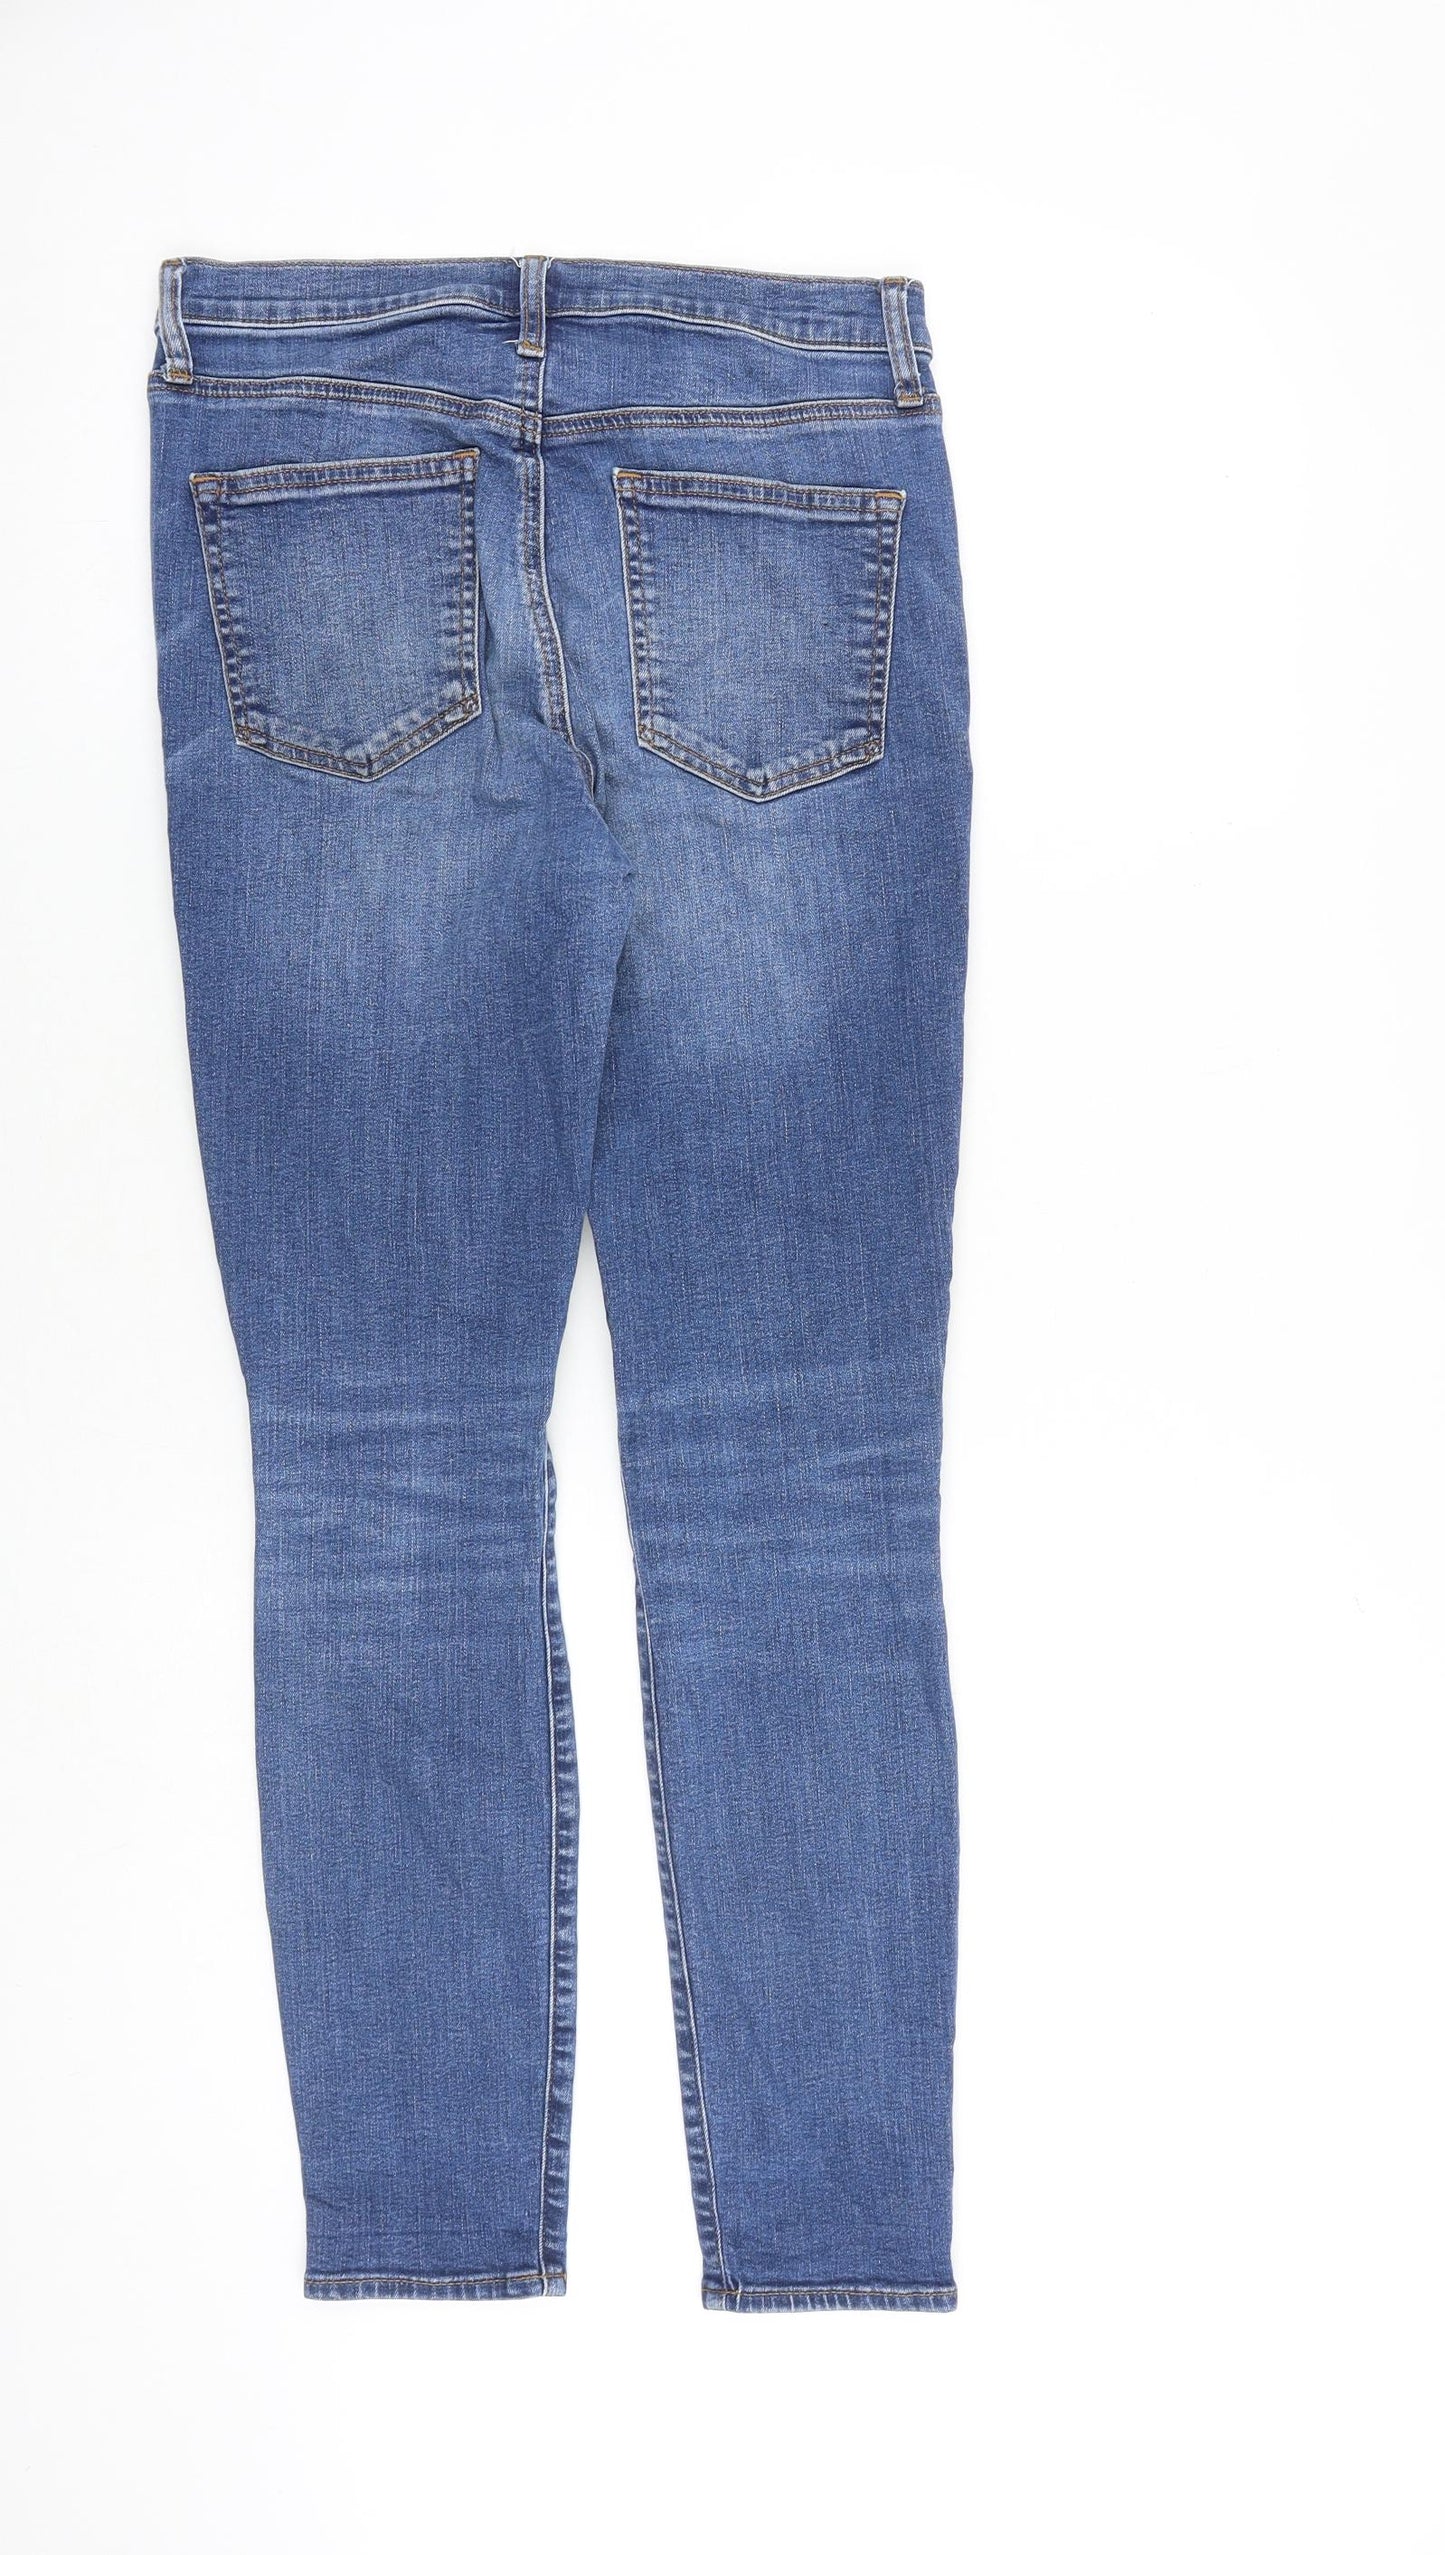 Gap Womens Blue Cotton Skinny Jeans Size 28 in L28 in Slim Zip